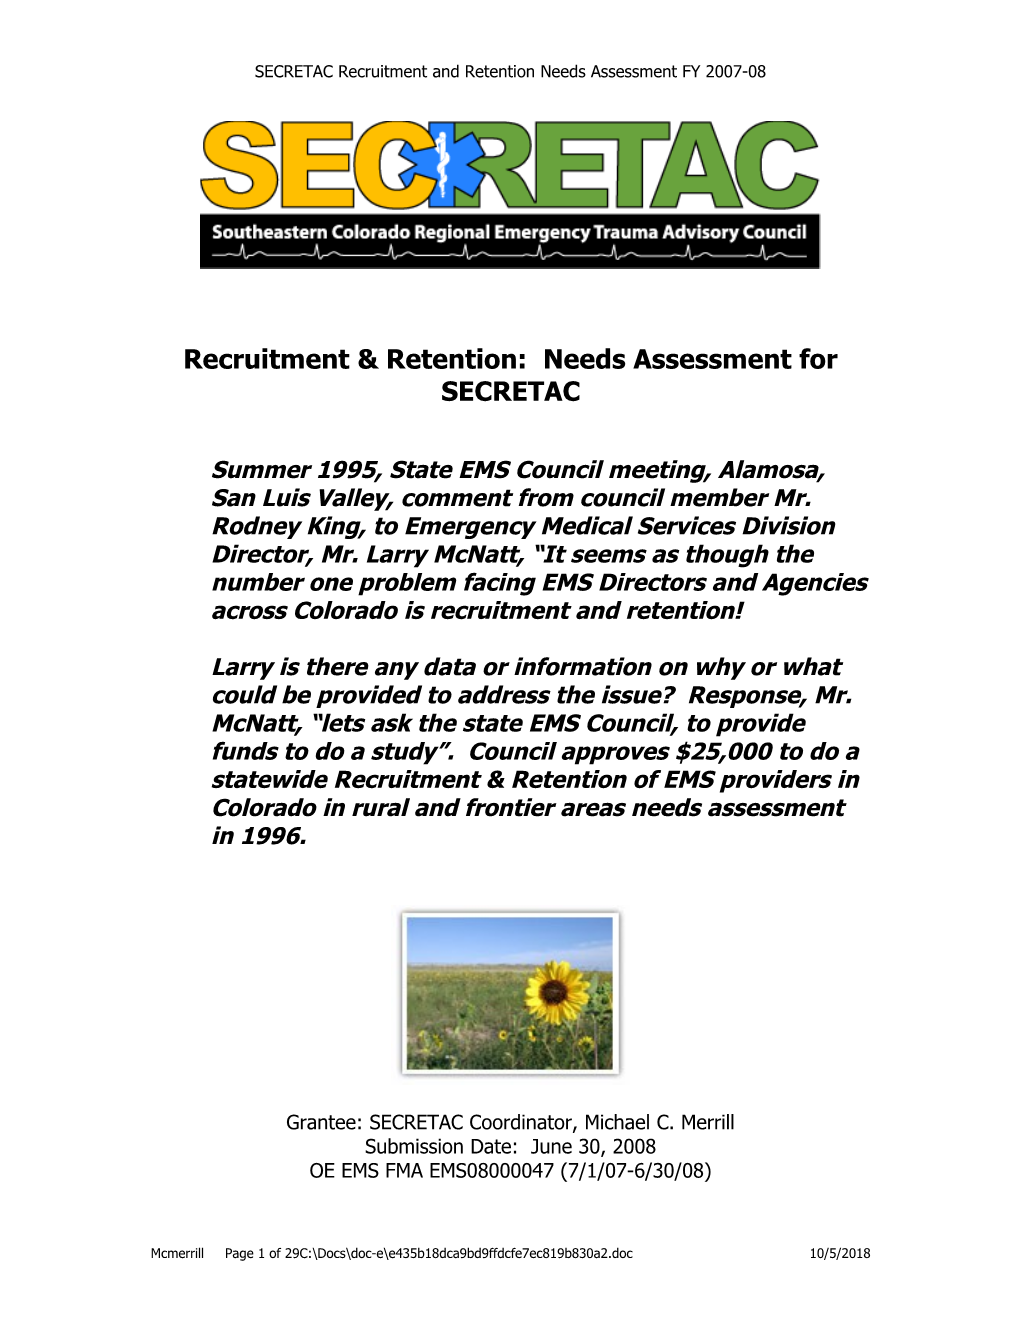 Recruitment & Retention: Needs Assessment for SECRETAC